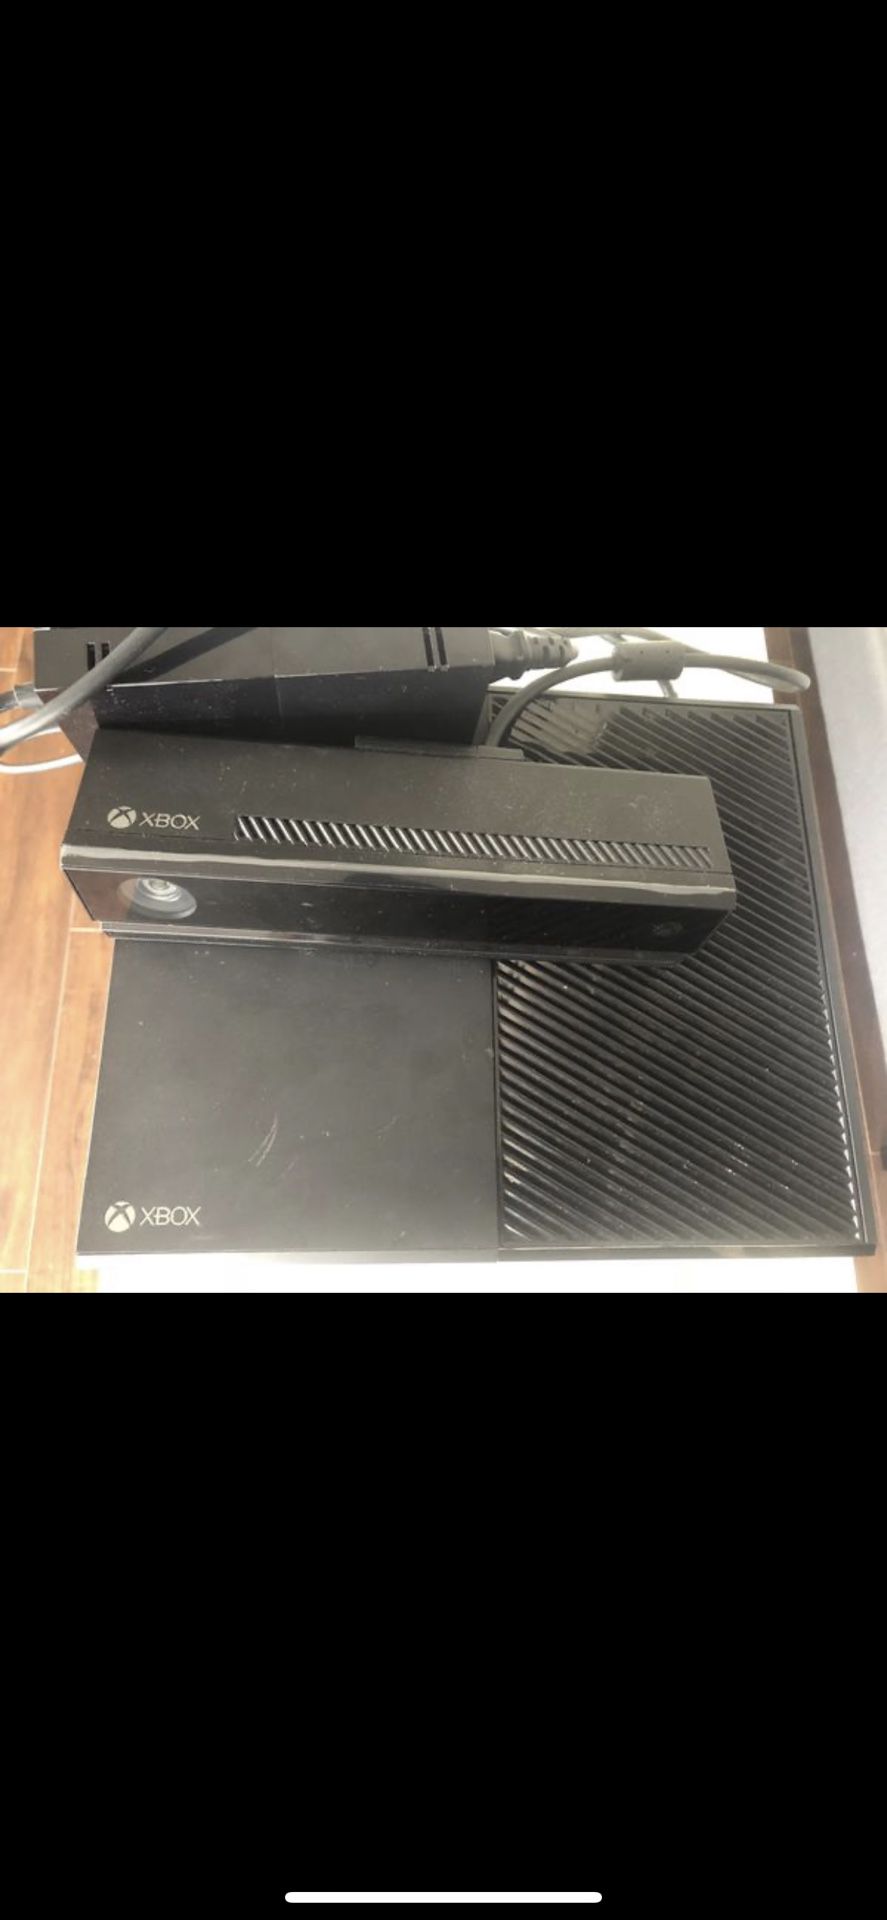 X Box One + Kinect Sensor + power supply brick